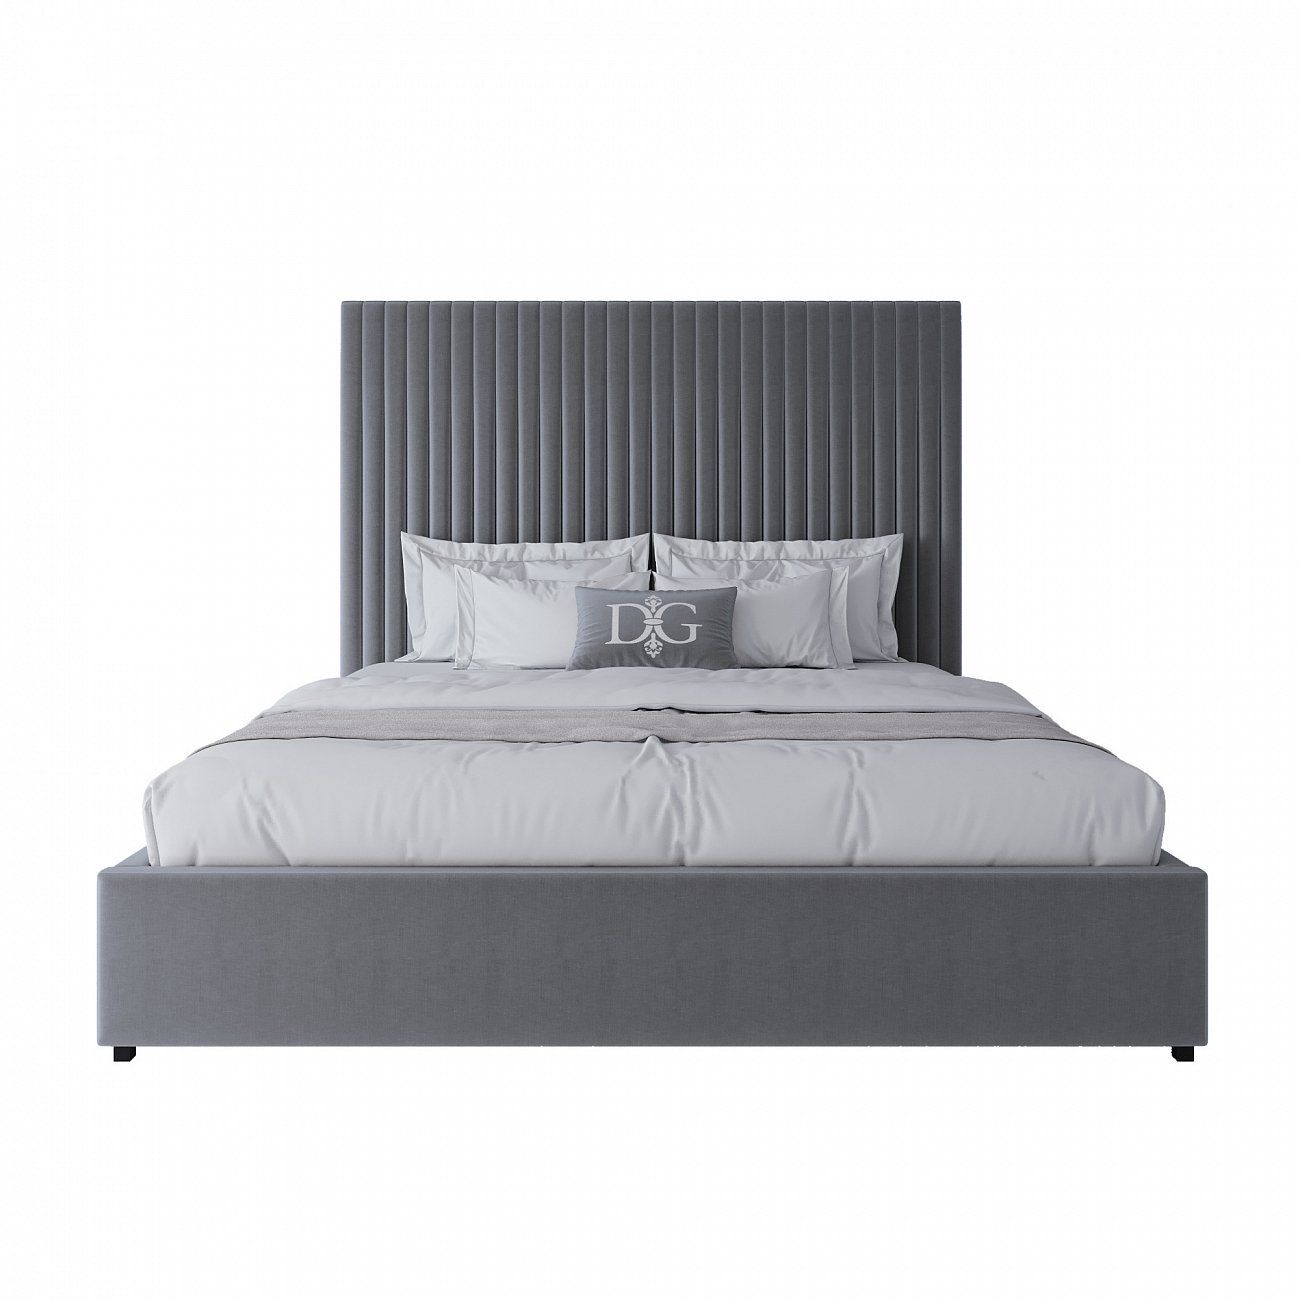 Mora double bed 180x200 grey